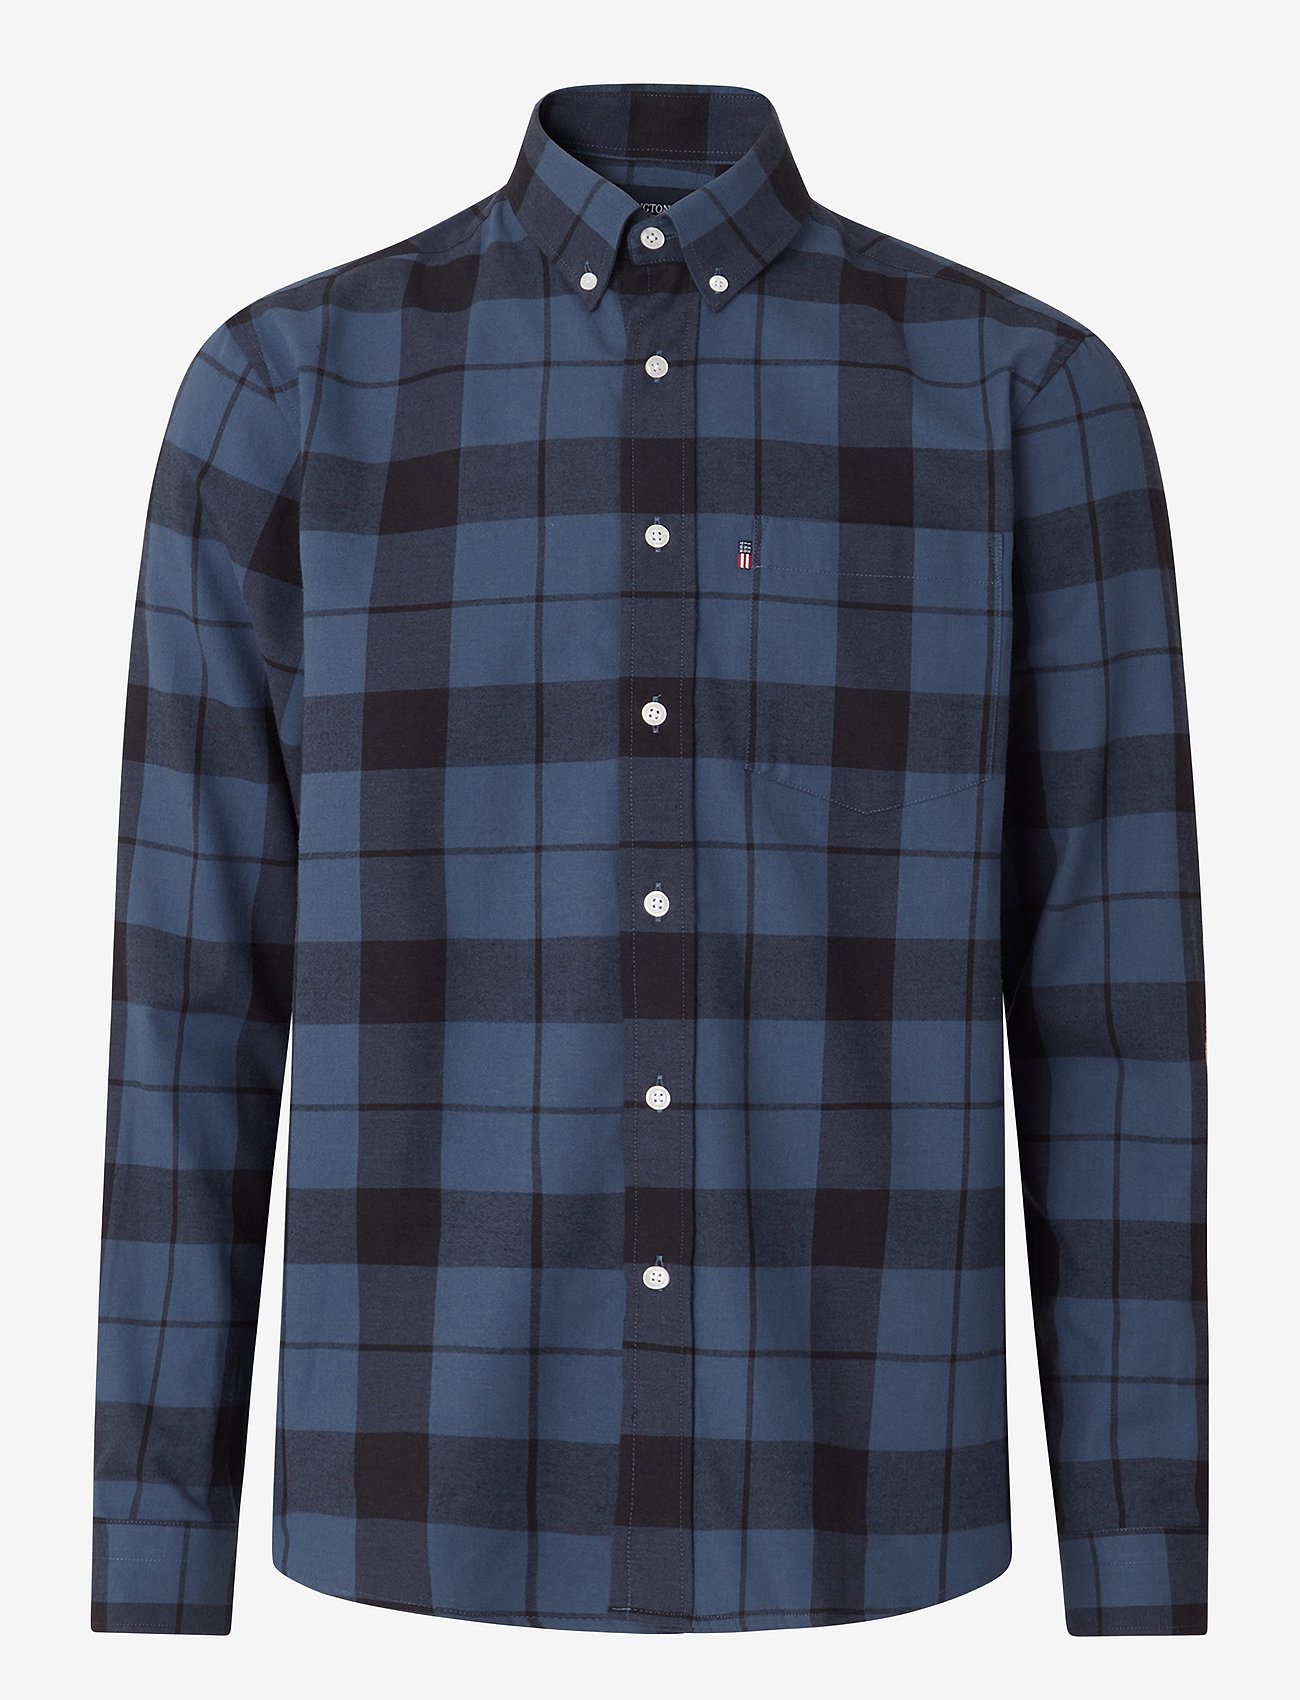 Lexington Clothing - Casual Check Flannel B.D Shirt - casual skjortor - blue multi check - 0